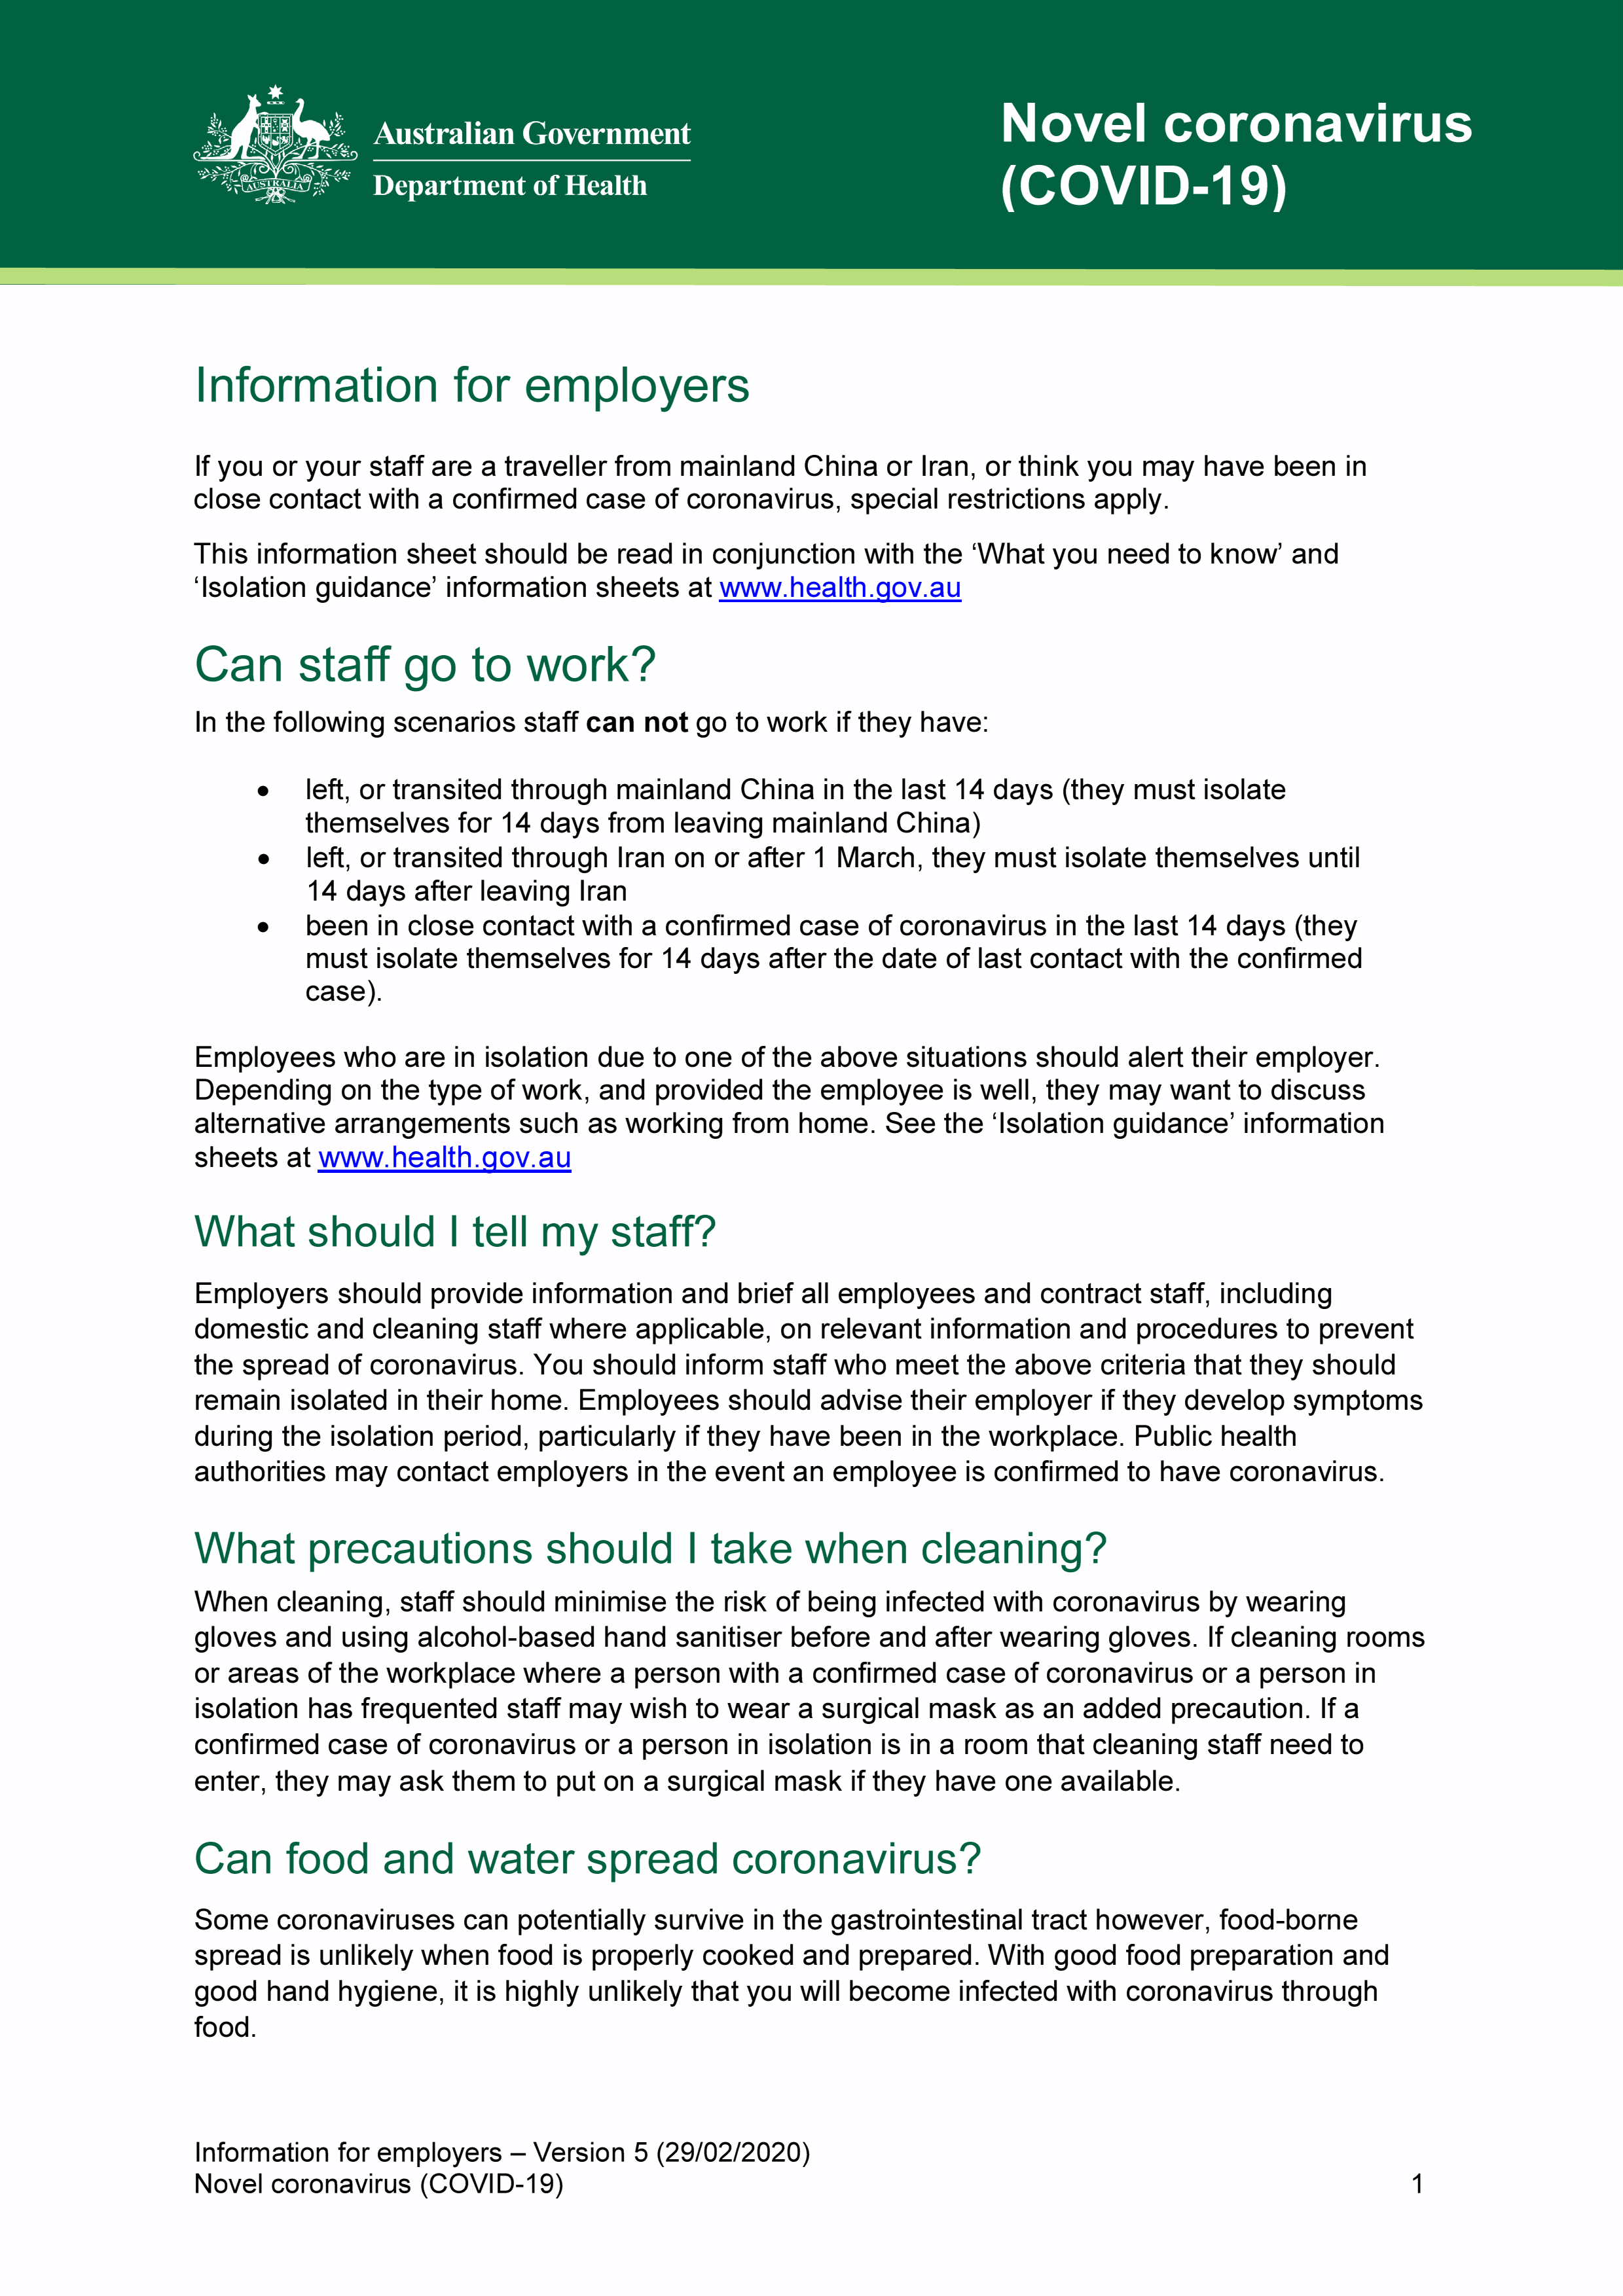 coronavirus-covid-19-information-for-employers_1.jpg